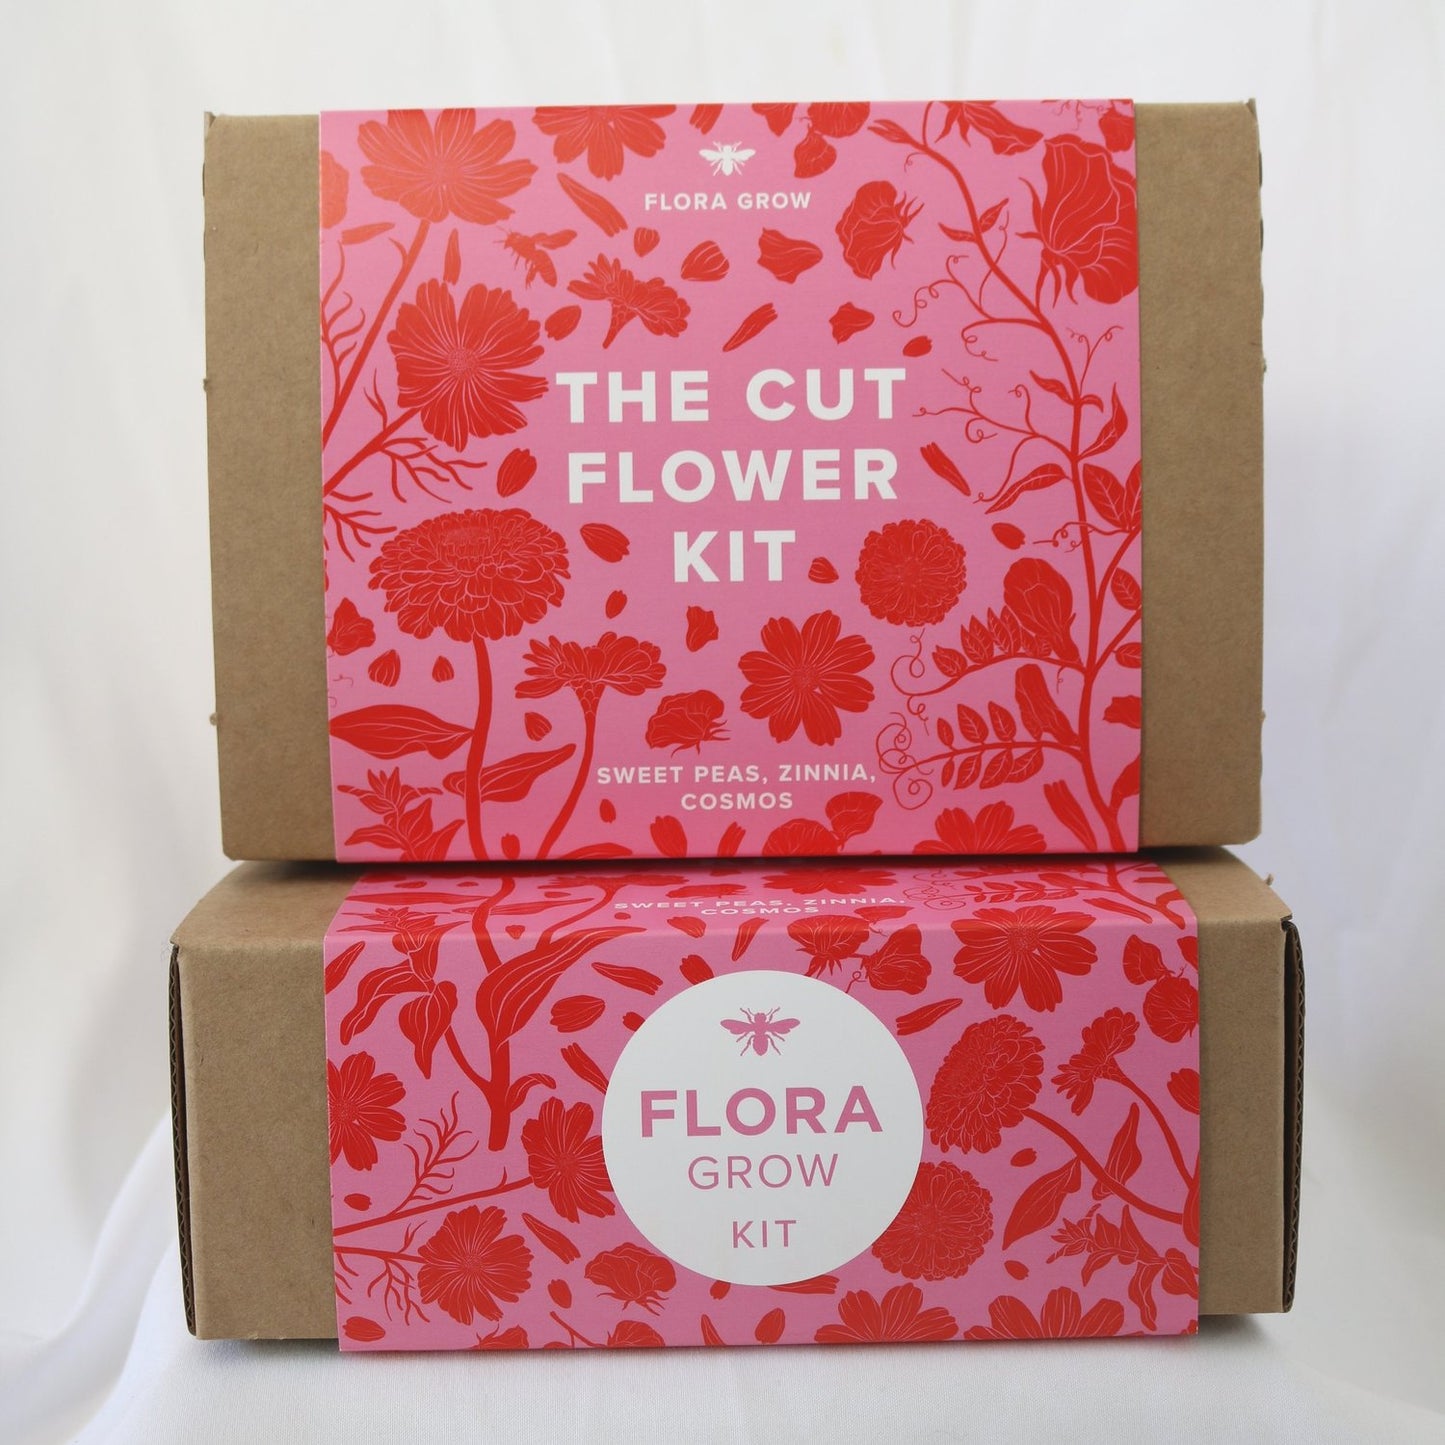 The Cut Flower Kit